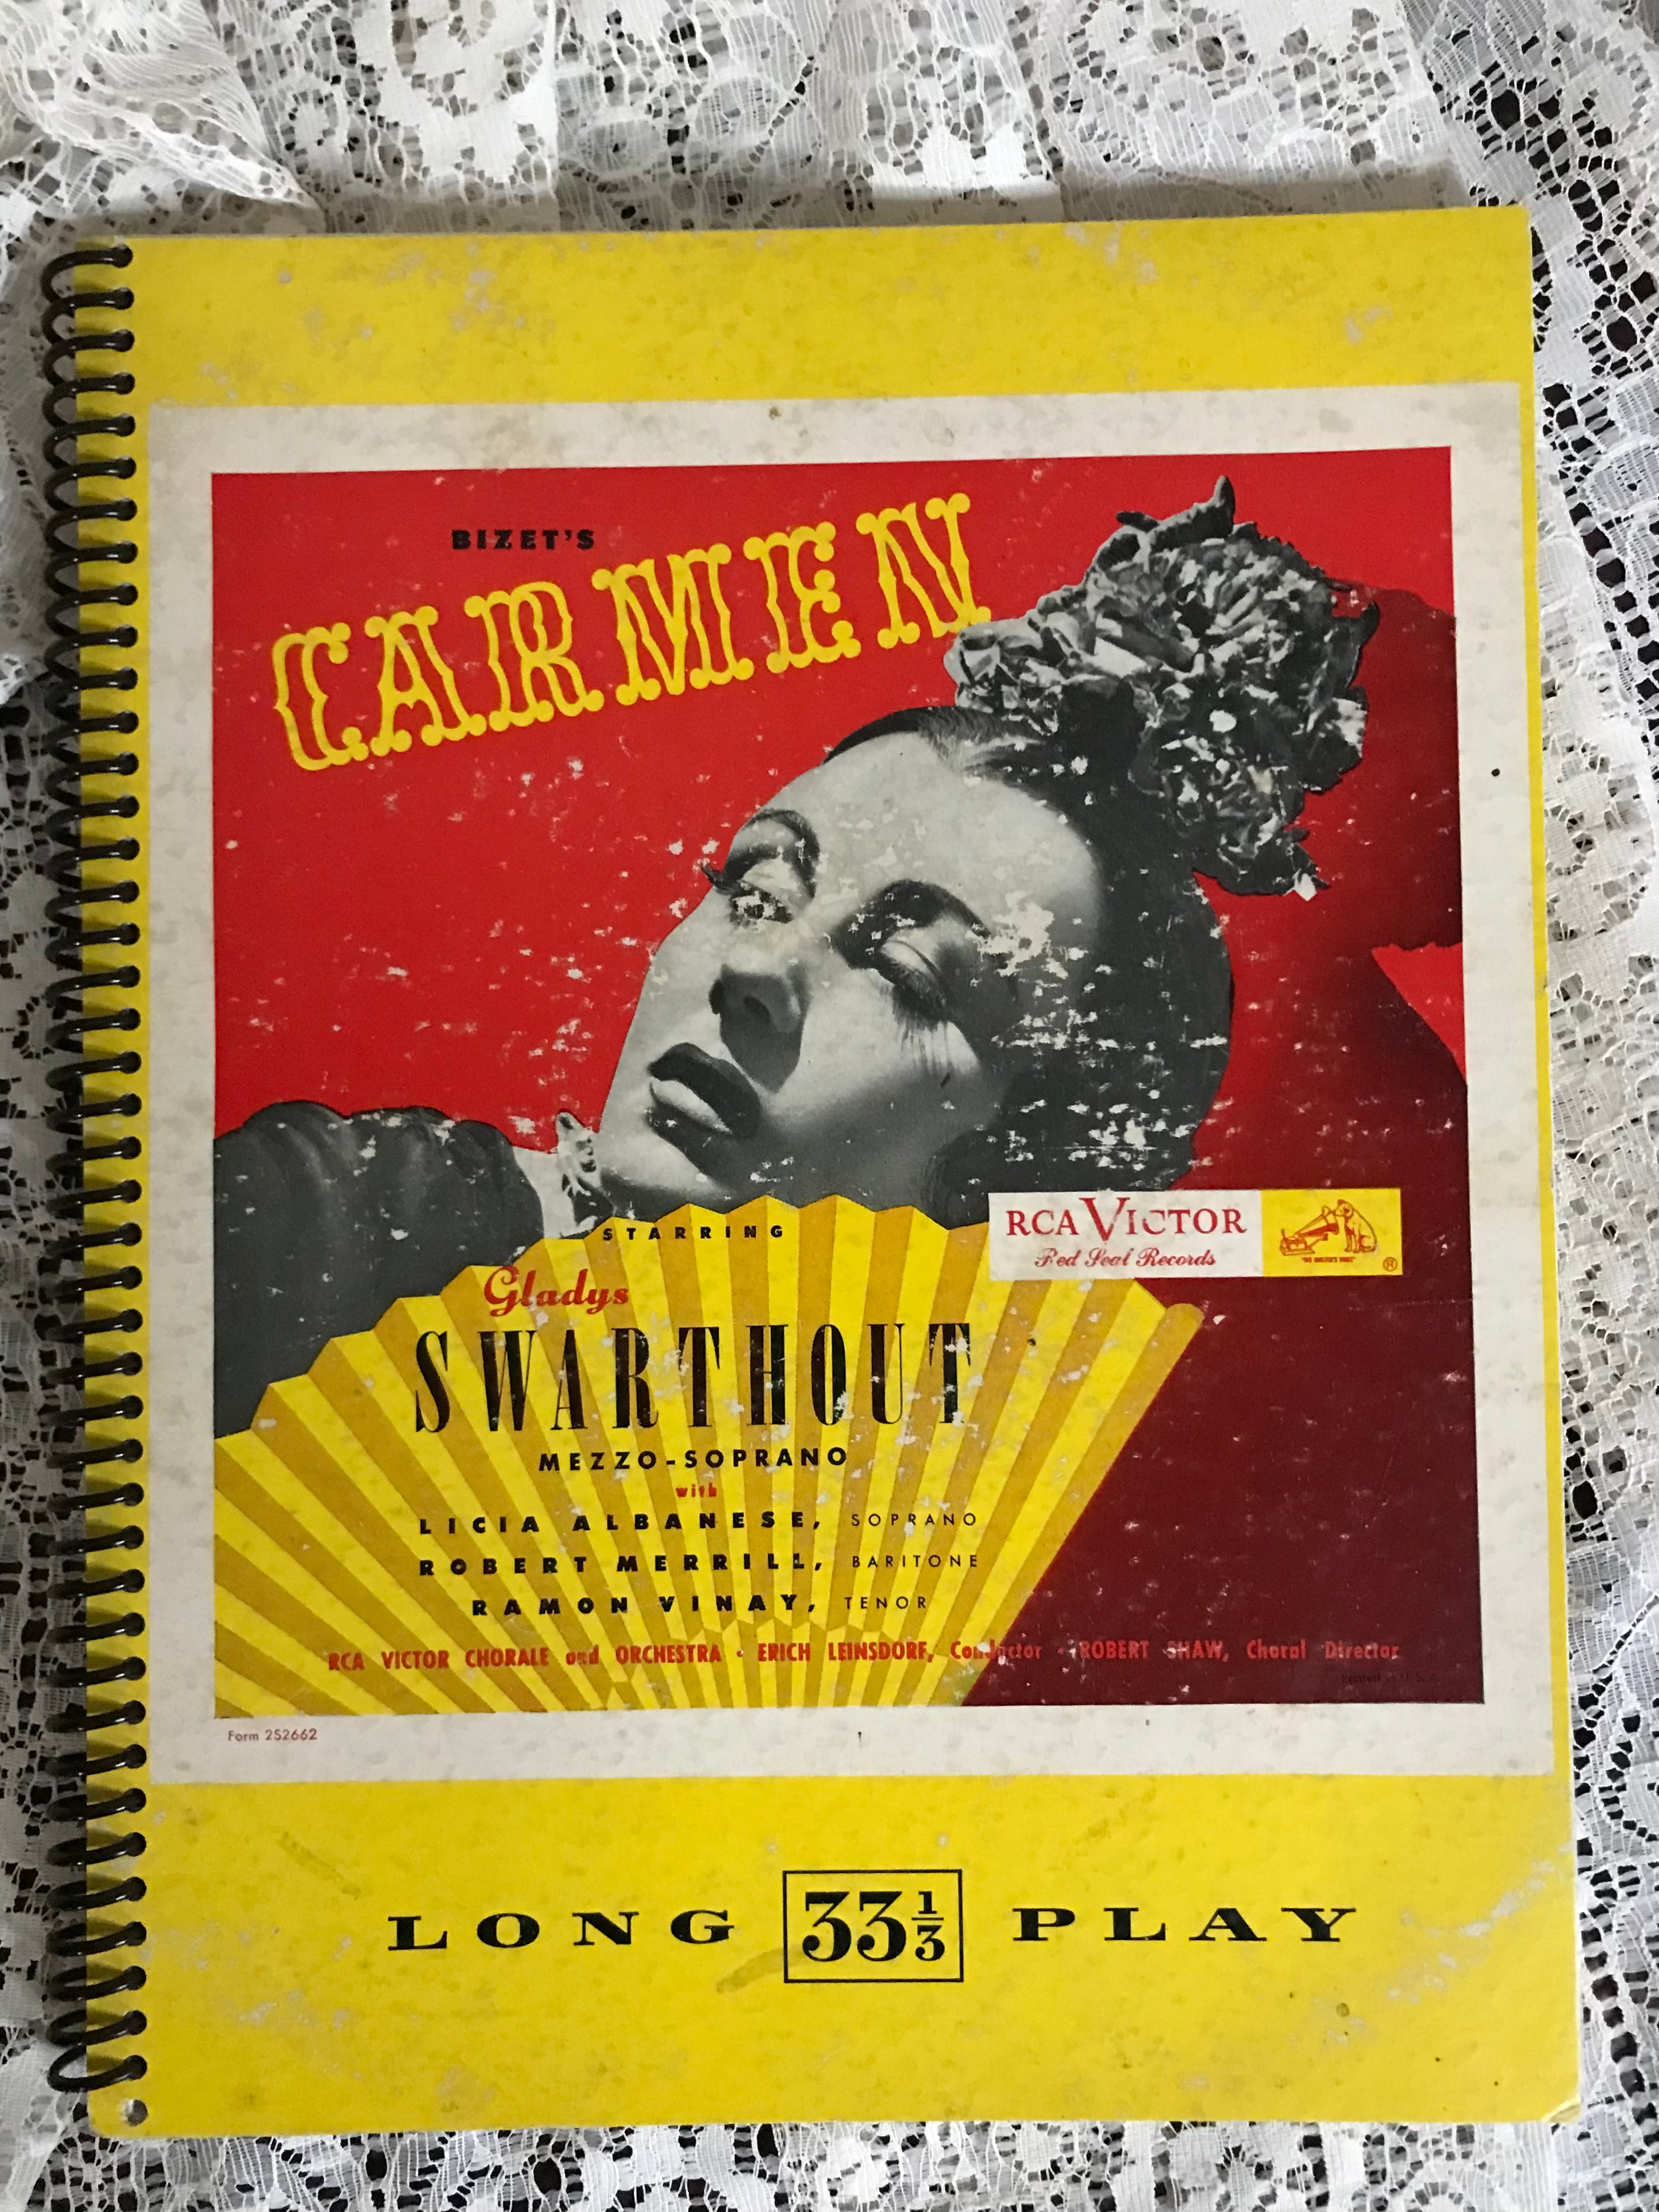 Carmen (Bizet) Album Cover Notebook